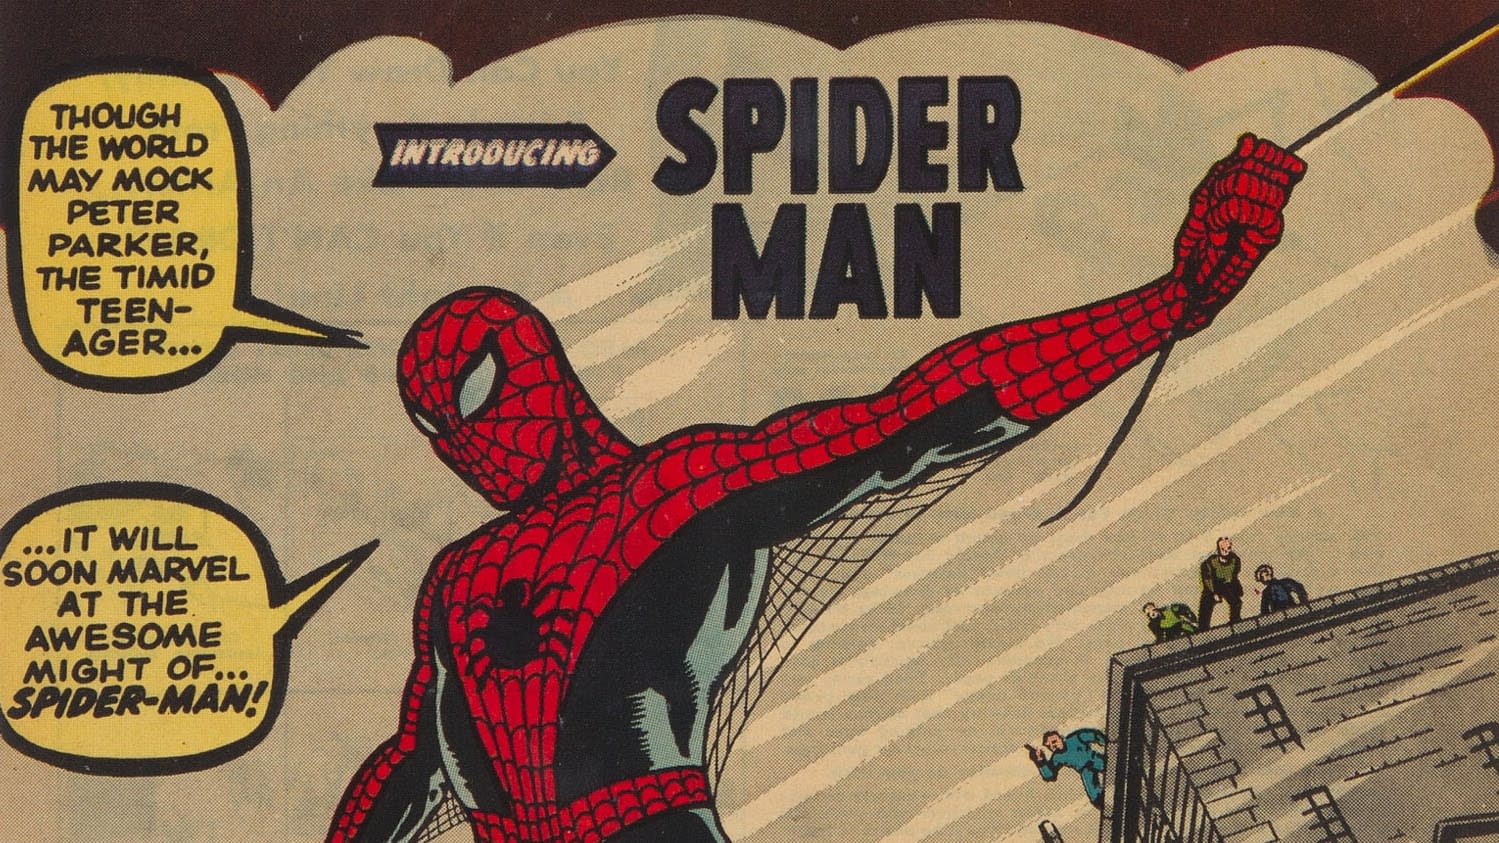 Restored Amazing Fantasy #15 CGC 9.8 Spider-Man Up For Auction